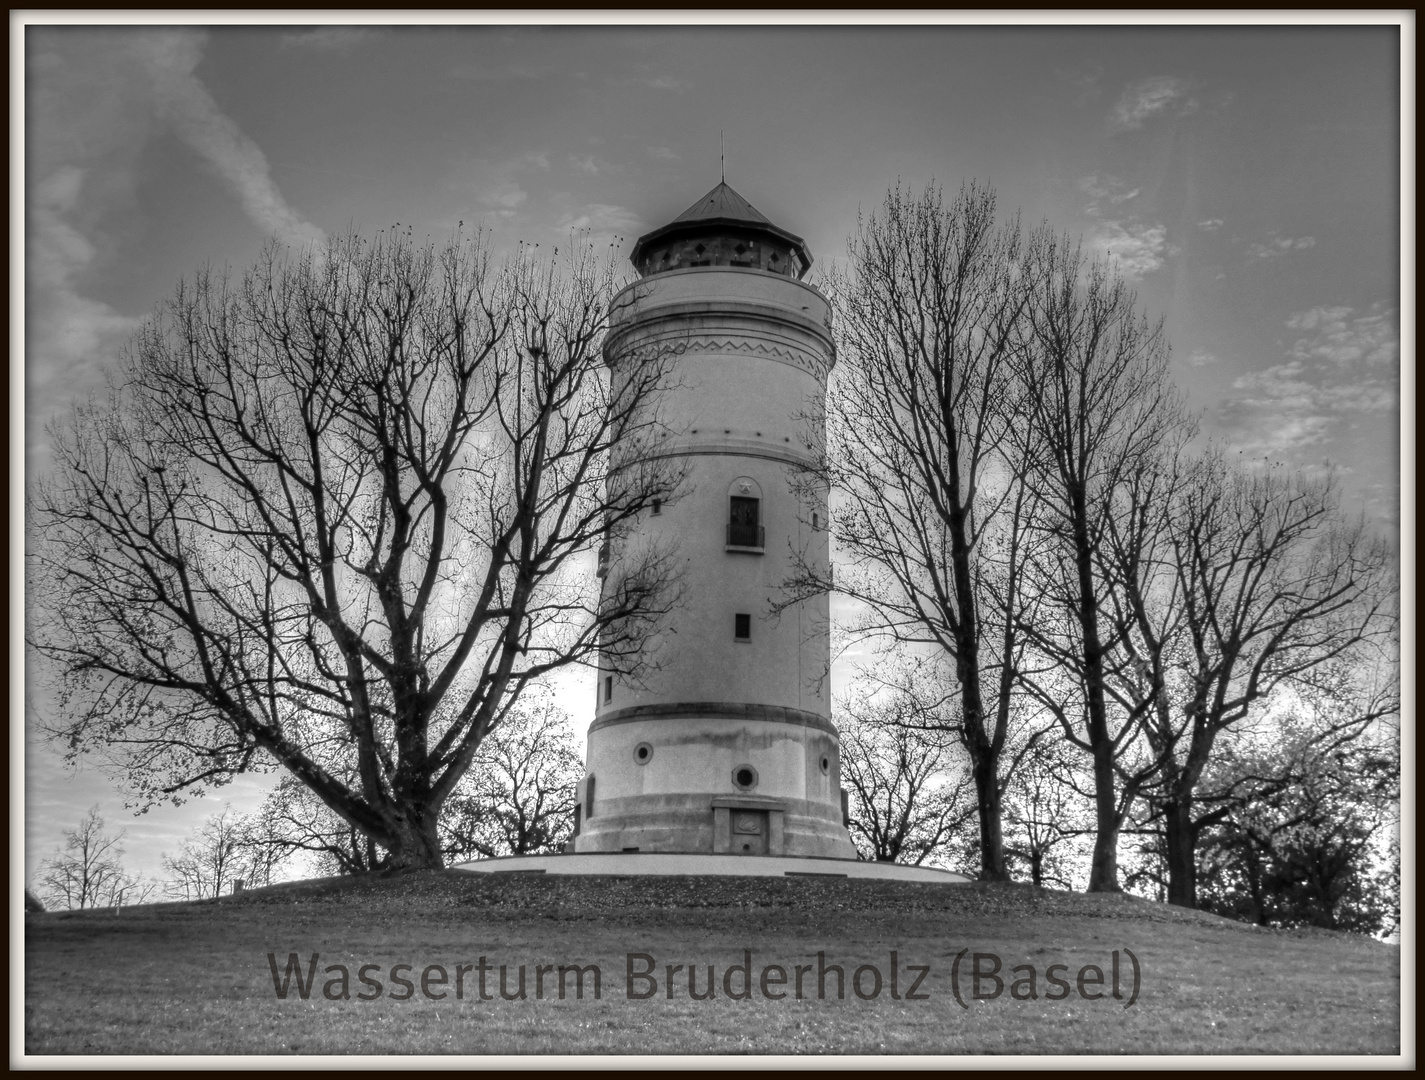 Wasserturm Bruderholz (Basel) - SW-HDR